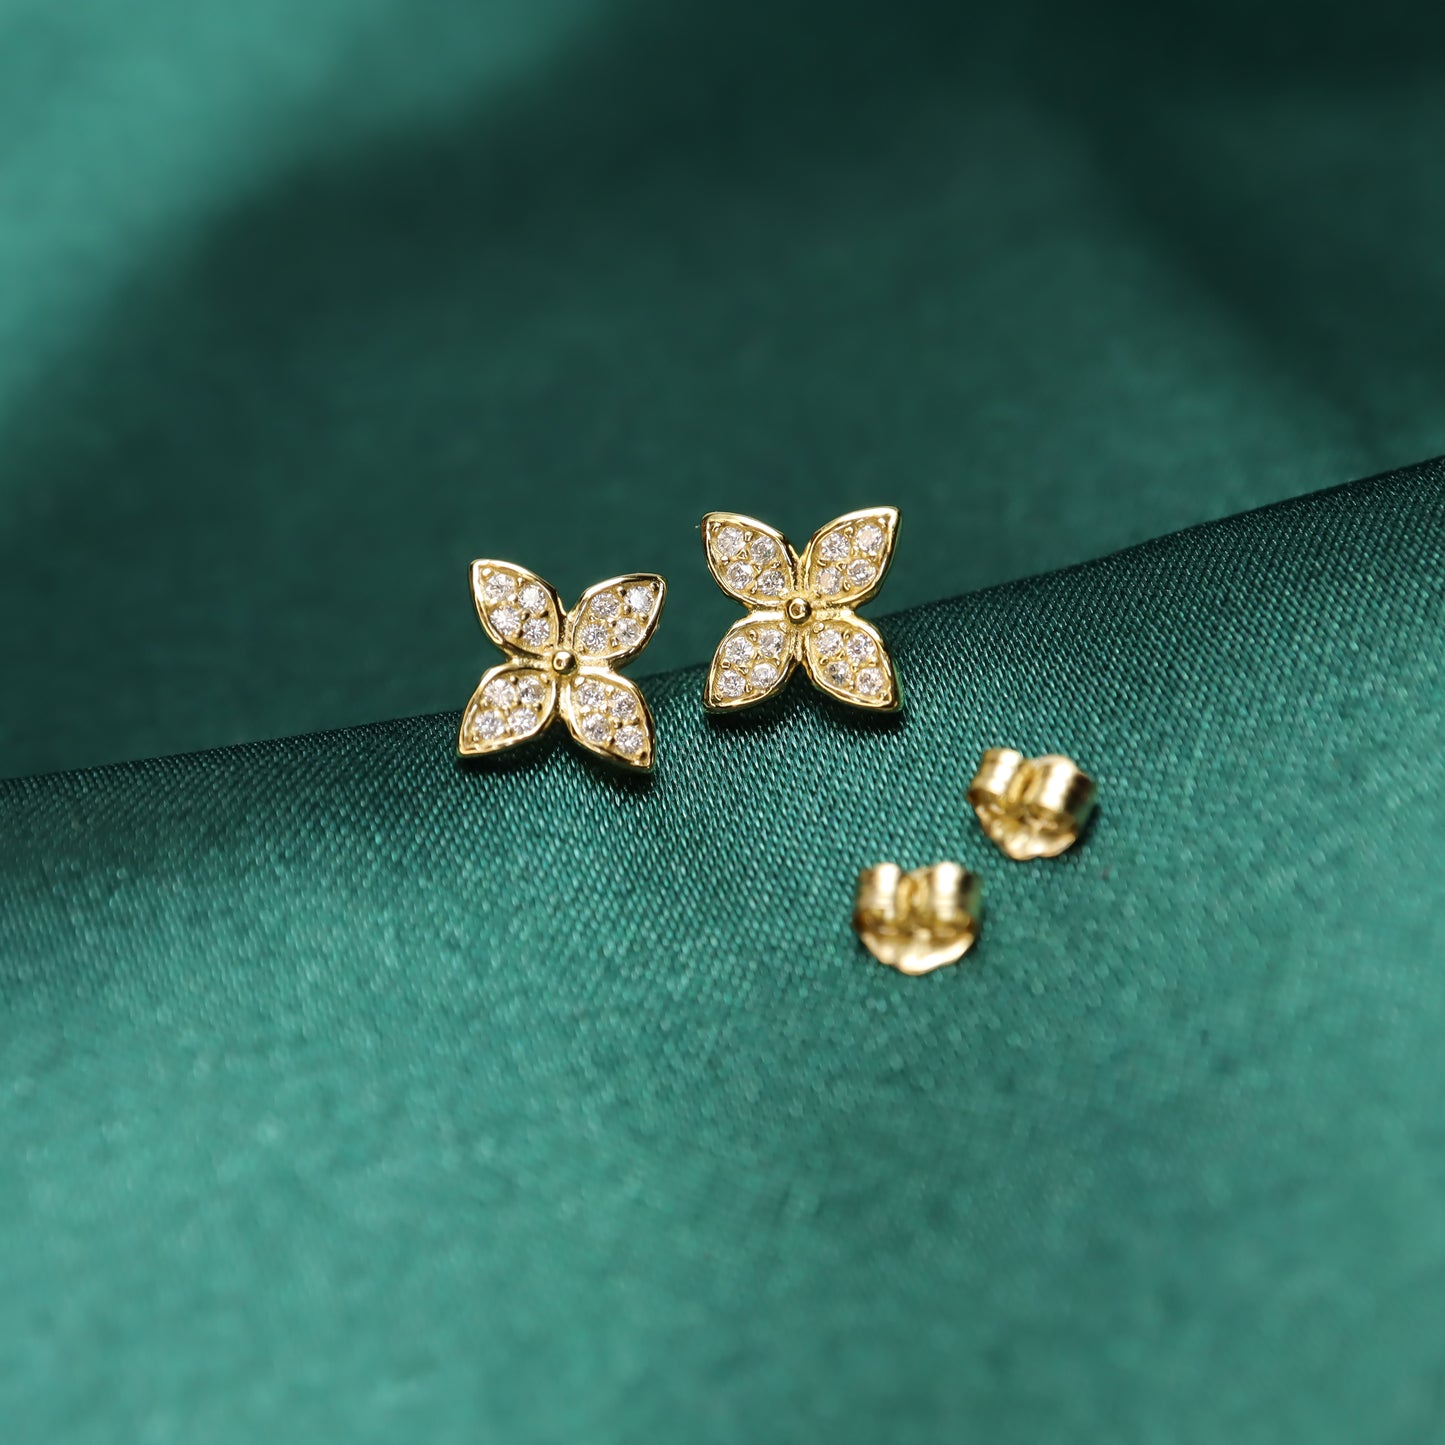 Four Petal Flower S925 Sterling Silver Stud Earrings (Color: Gold)